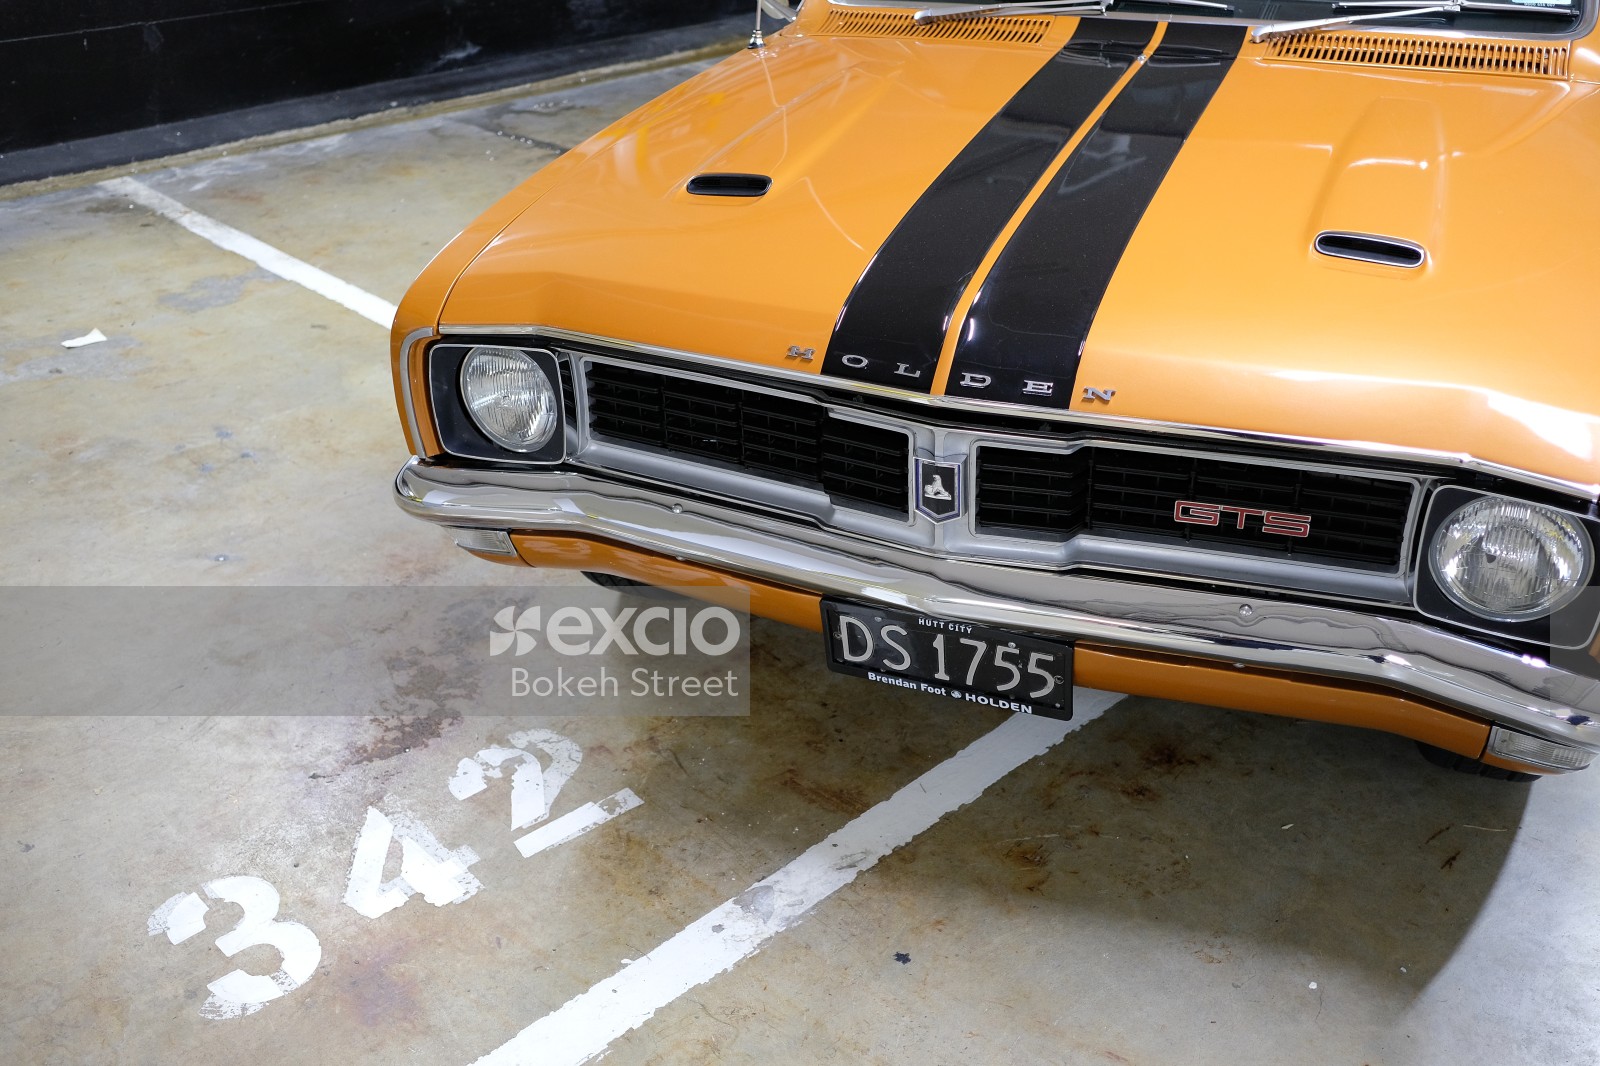 Classic orange Holden Monaro GTS bumper grille and headlights